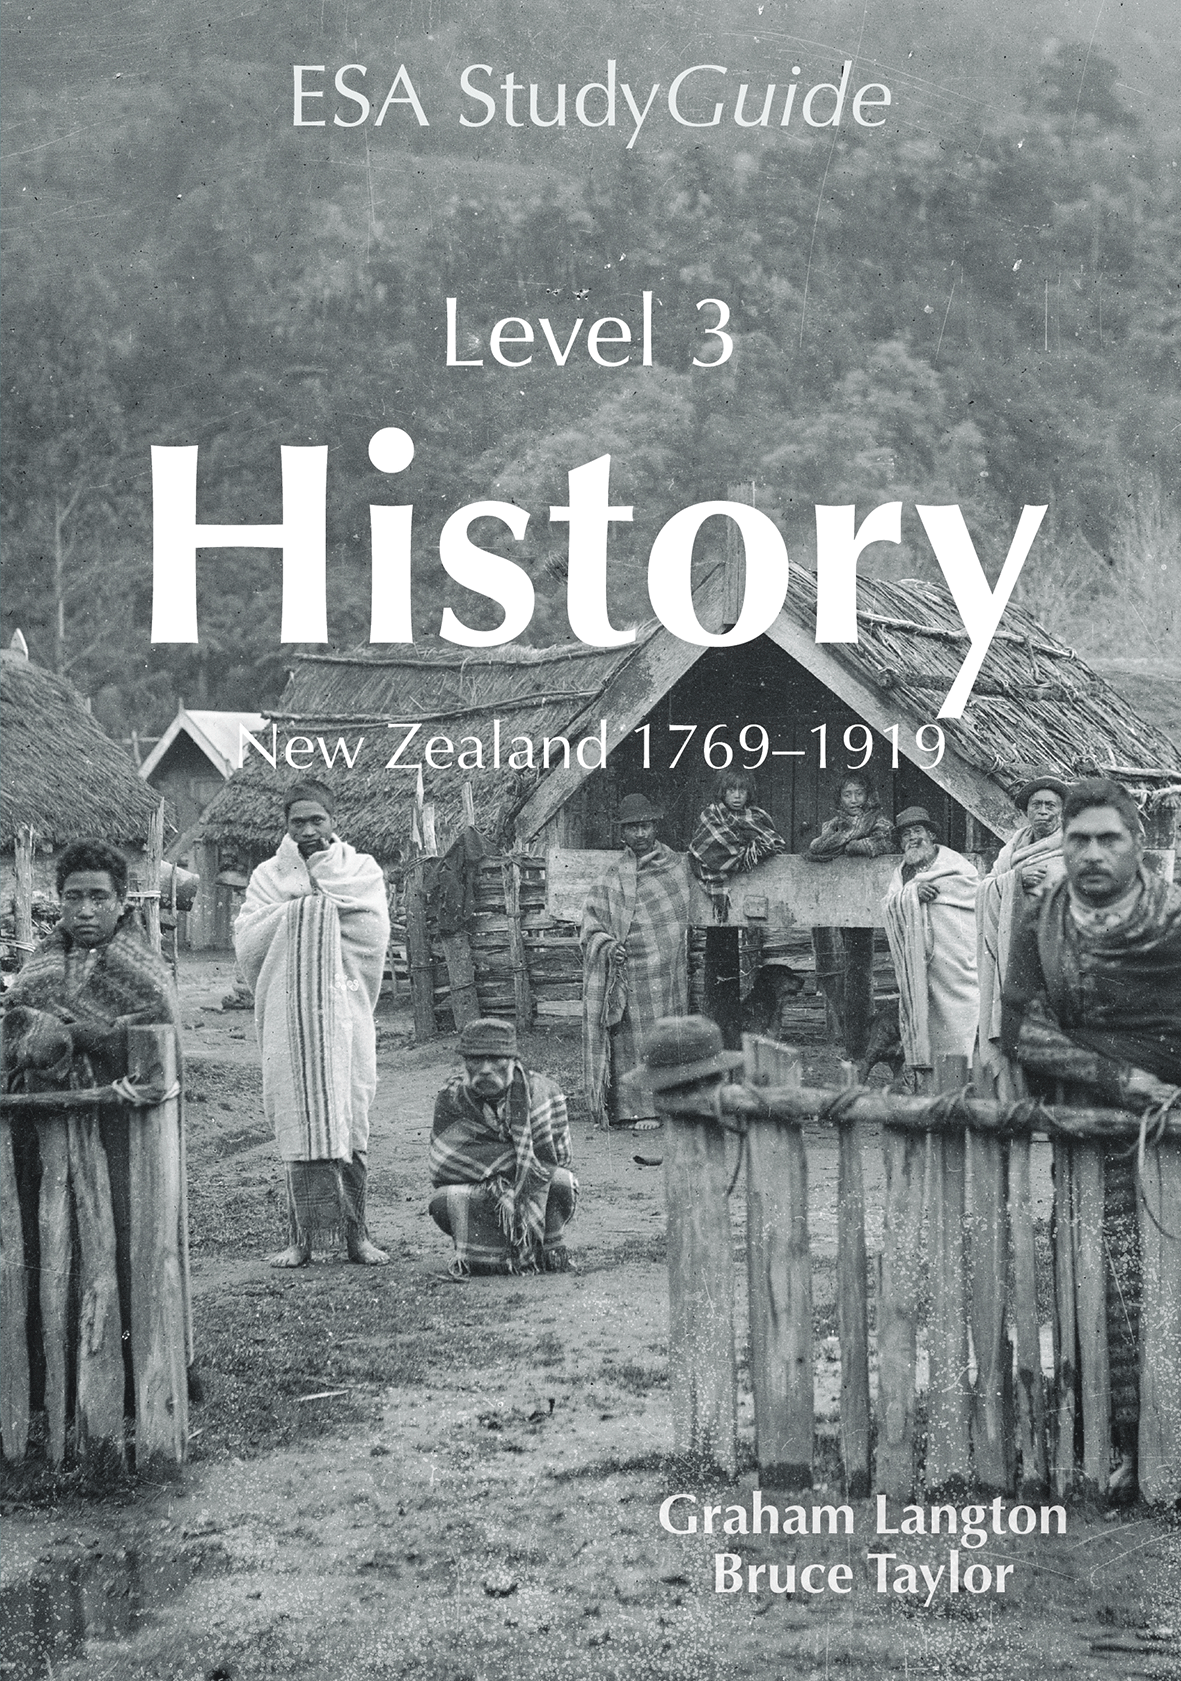 Level 3 History New Zealand ESA Study Guide